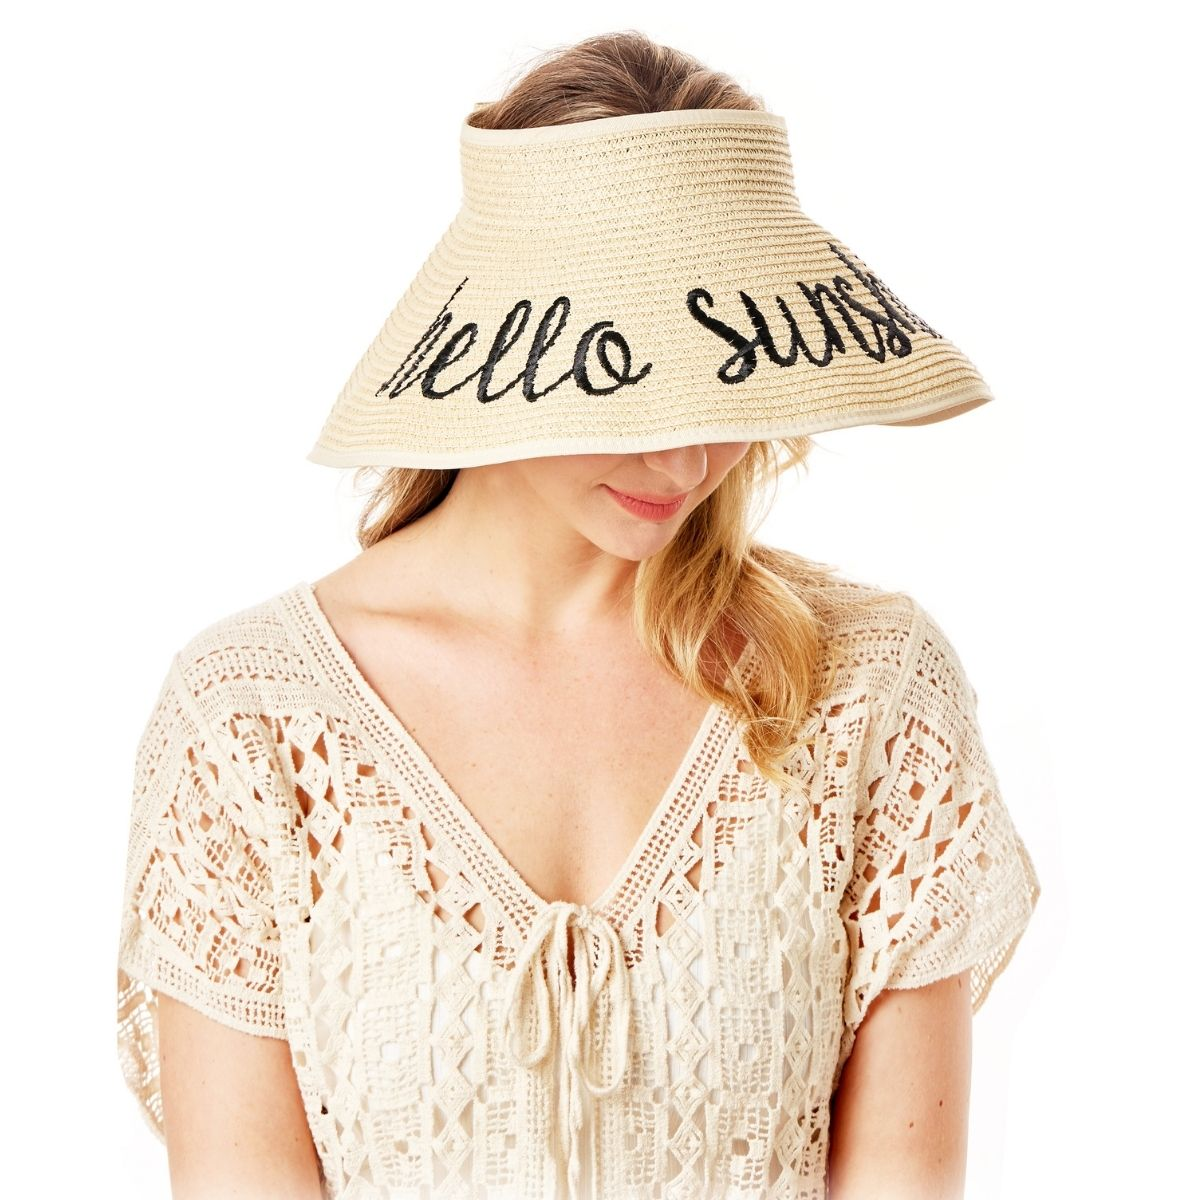 Hello Sunshine Beach Visor Hat